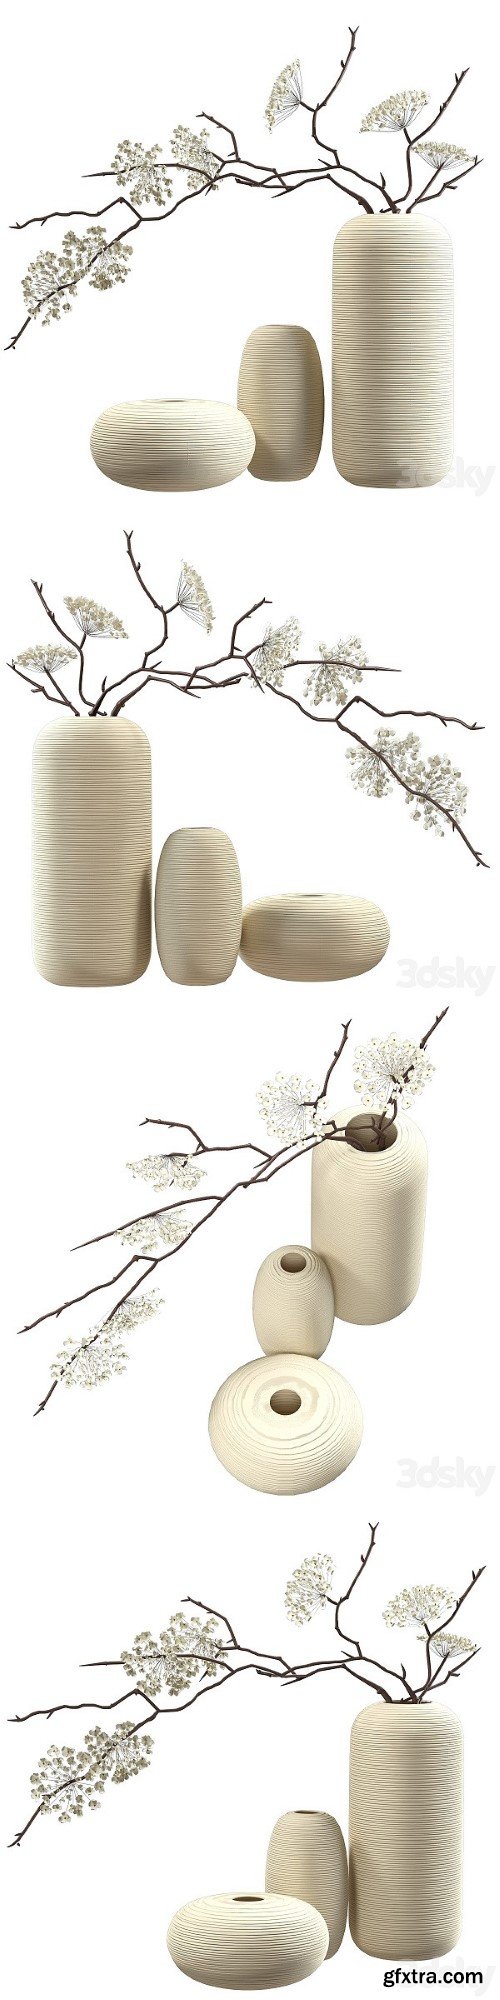 Bouquet of Flowering Branches in Ceramic Vases